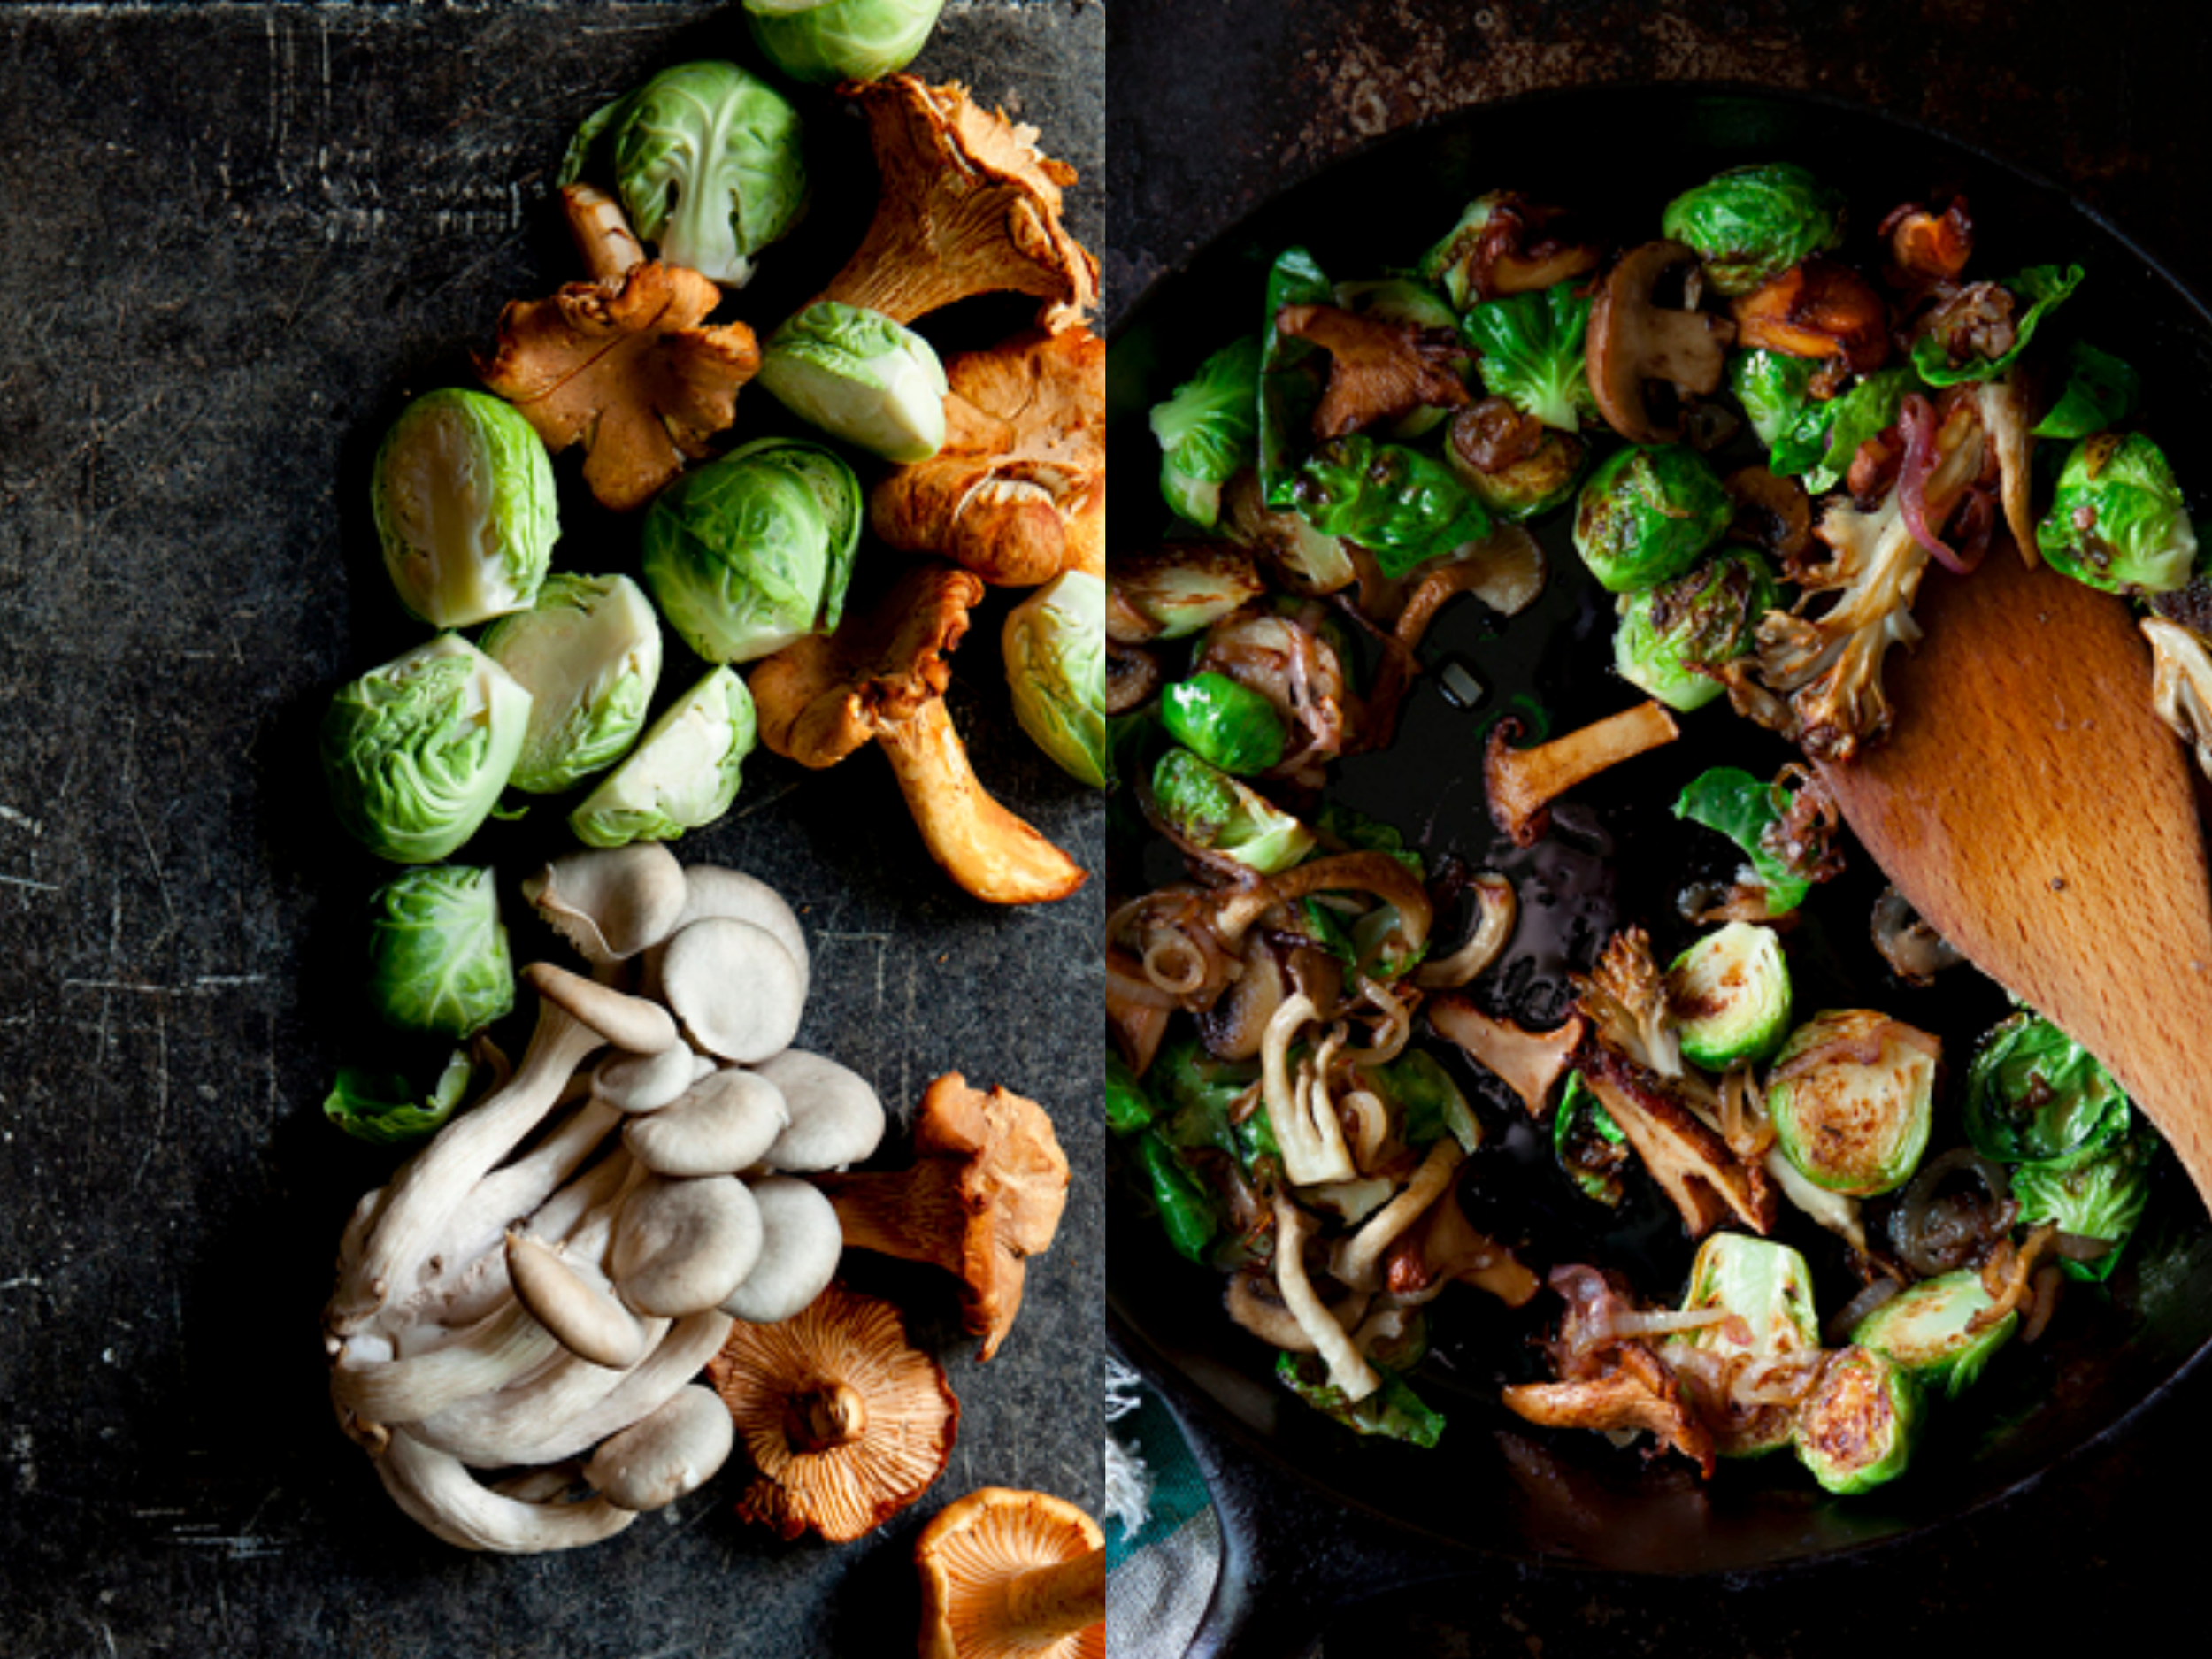 020 Mushroom Brusselsprout Collage.jpg